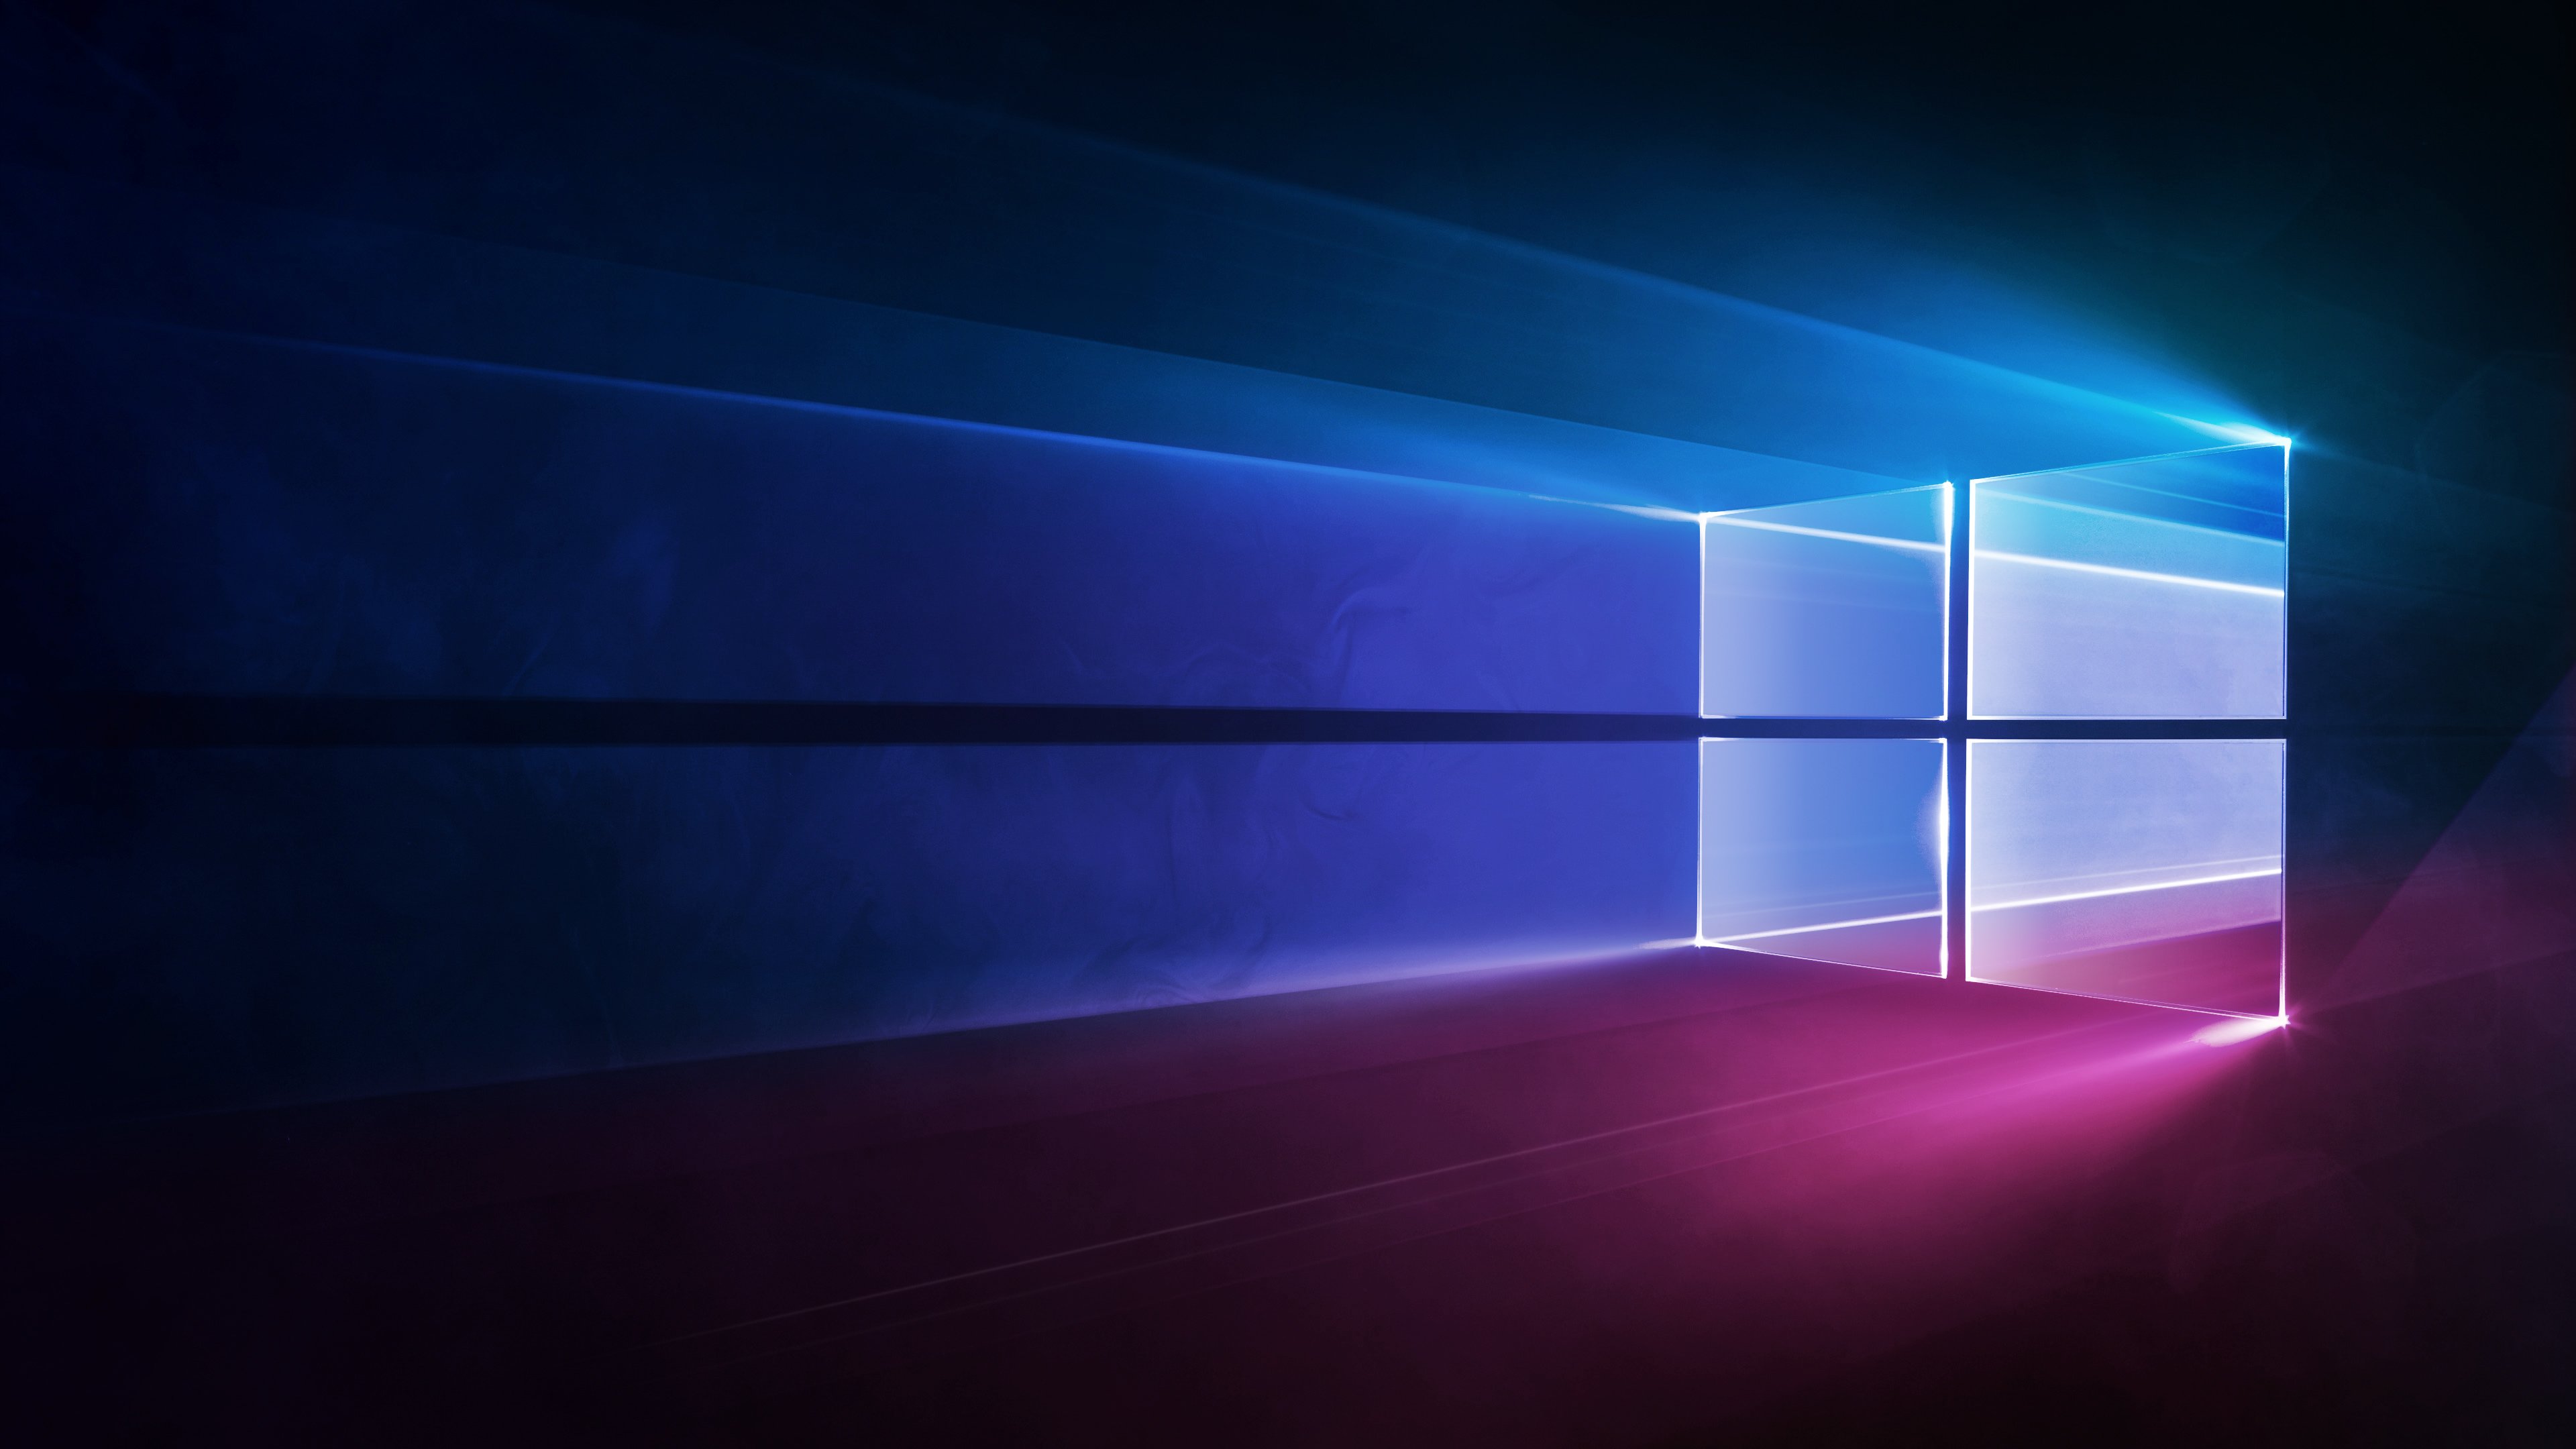 Windows10 Dark Wallpapers Hd Desktop And Mobile Backgrounds - Gambaran